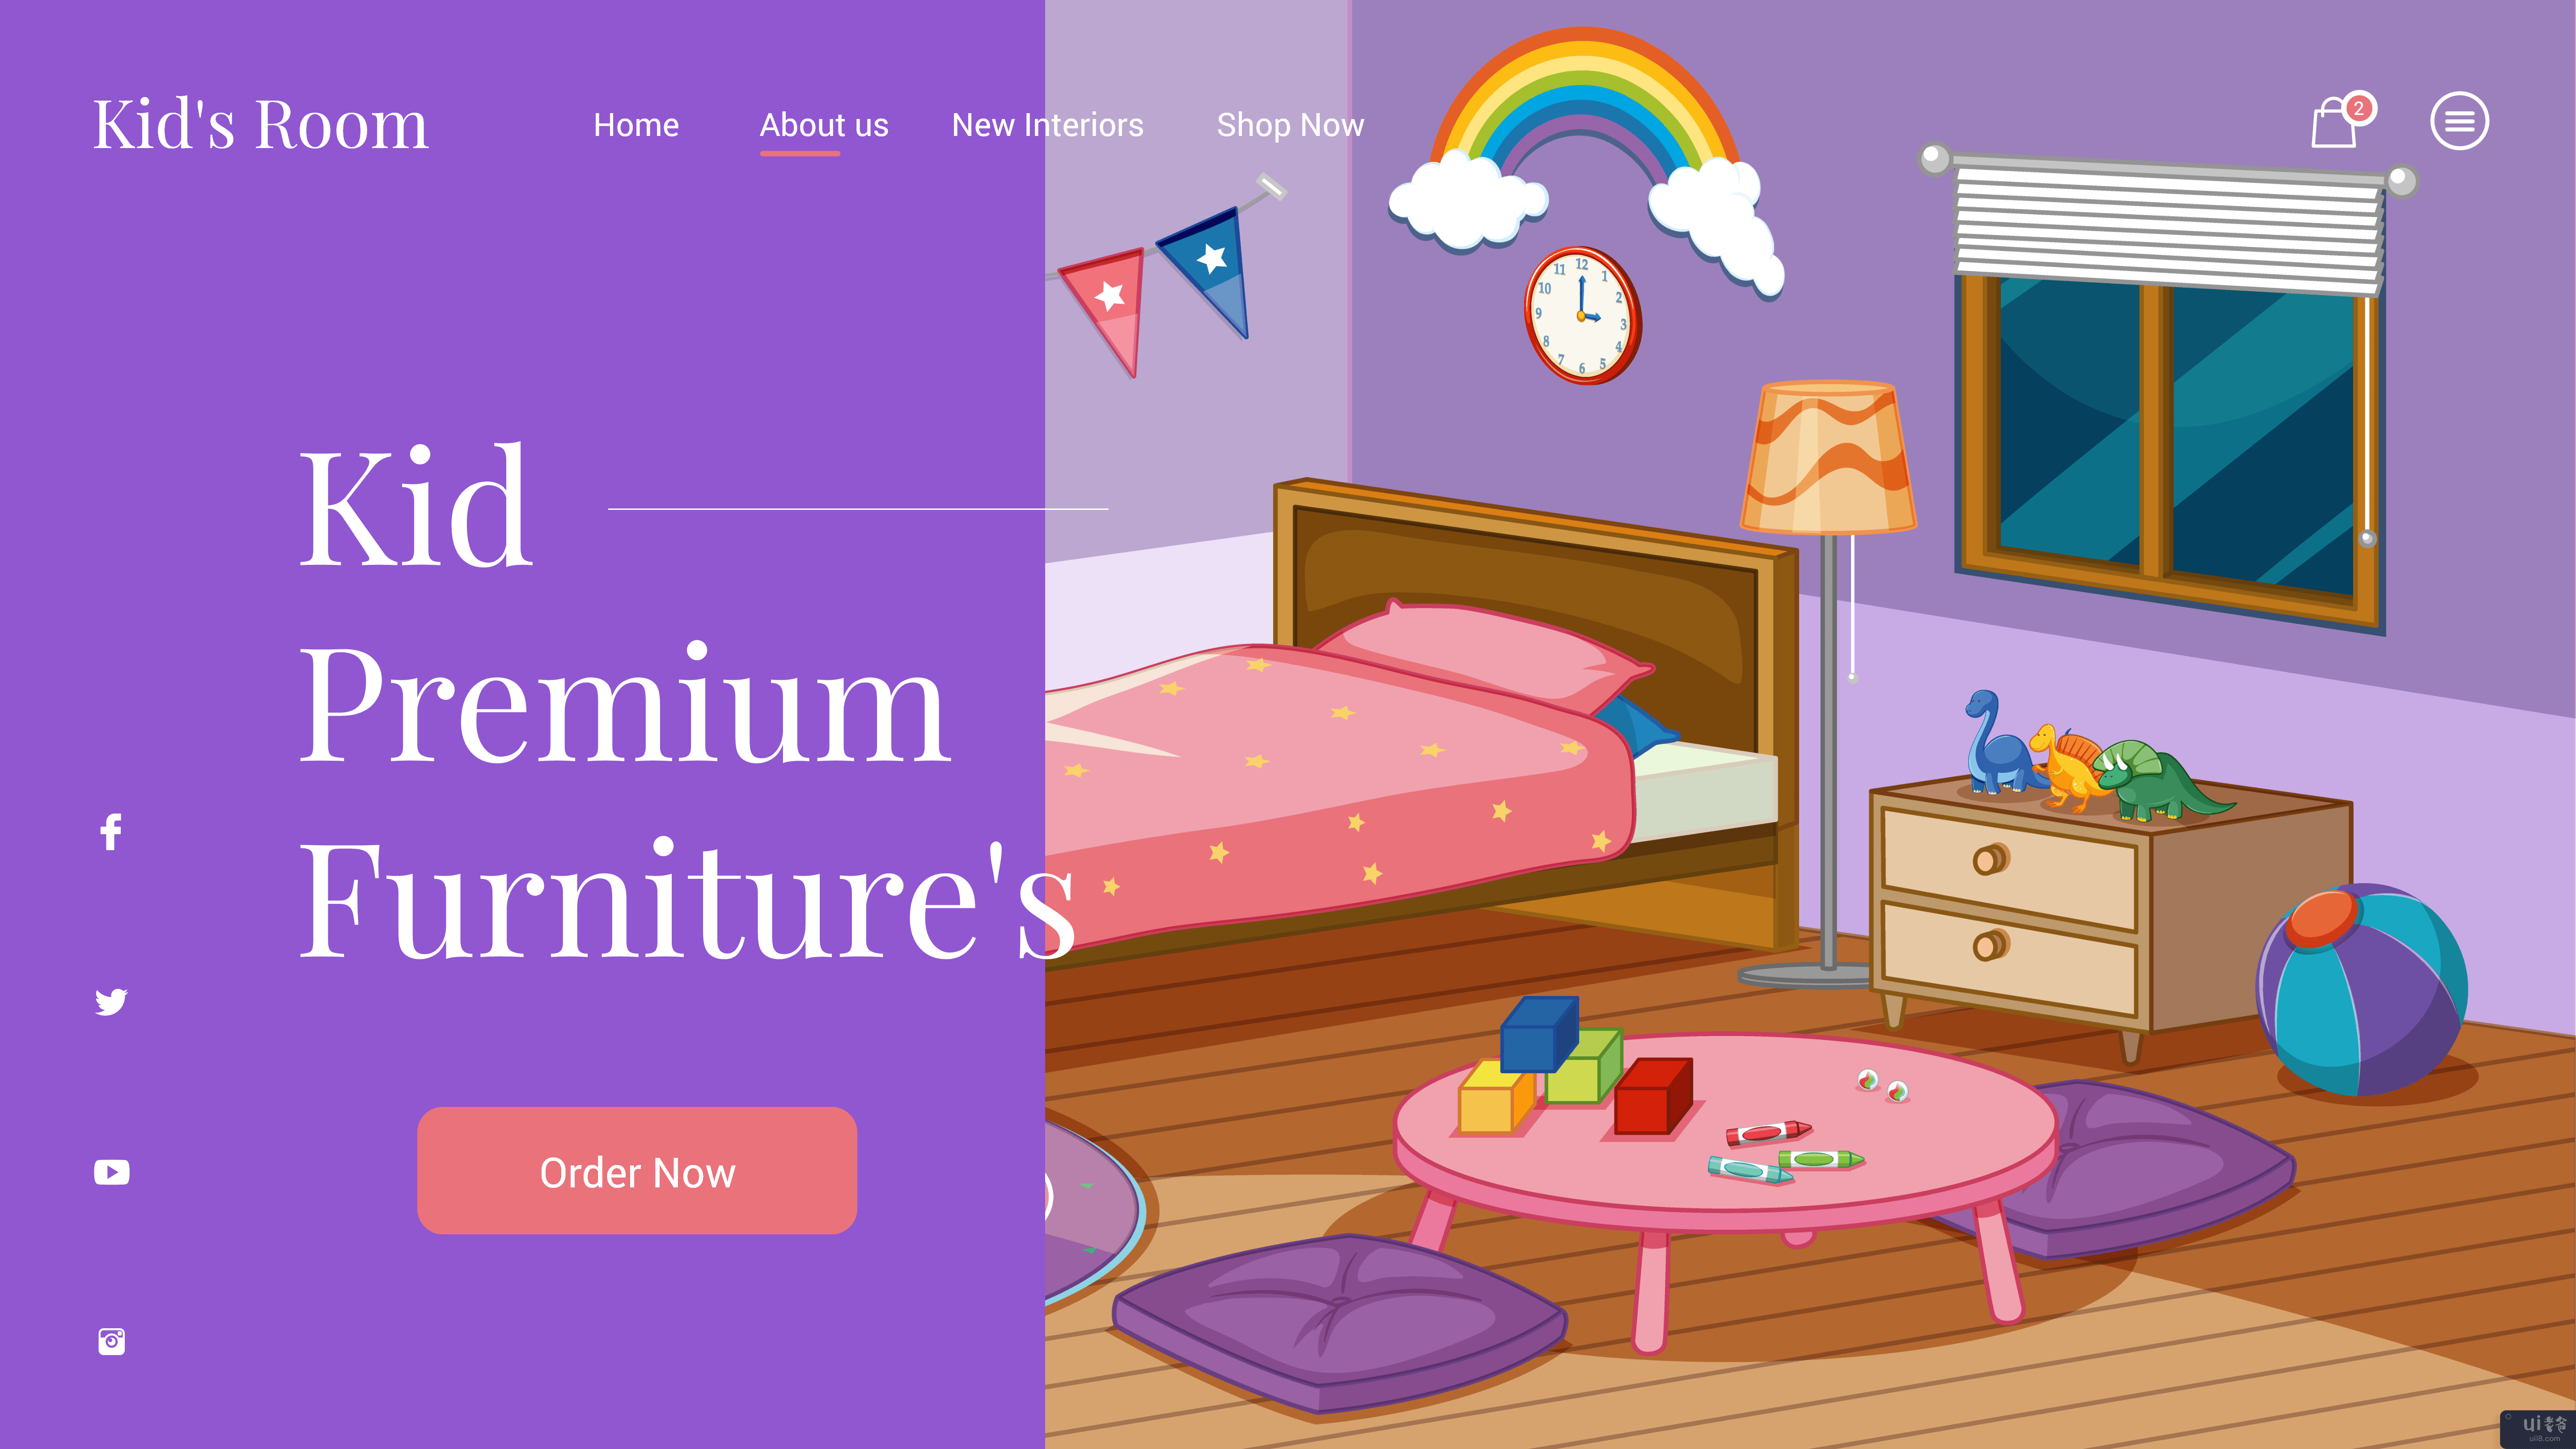 Kid Premium Furniture 的登陆页面 - 家具的网页模板(Kid Premium Furniture's Landing Page - Furniture's Web Template)插图1